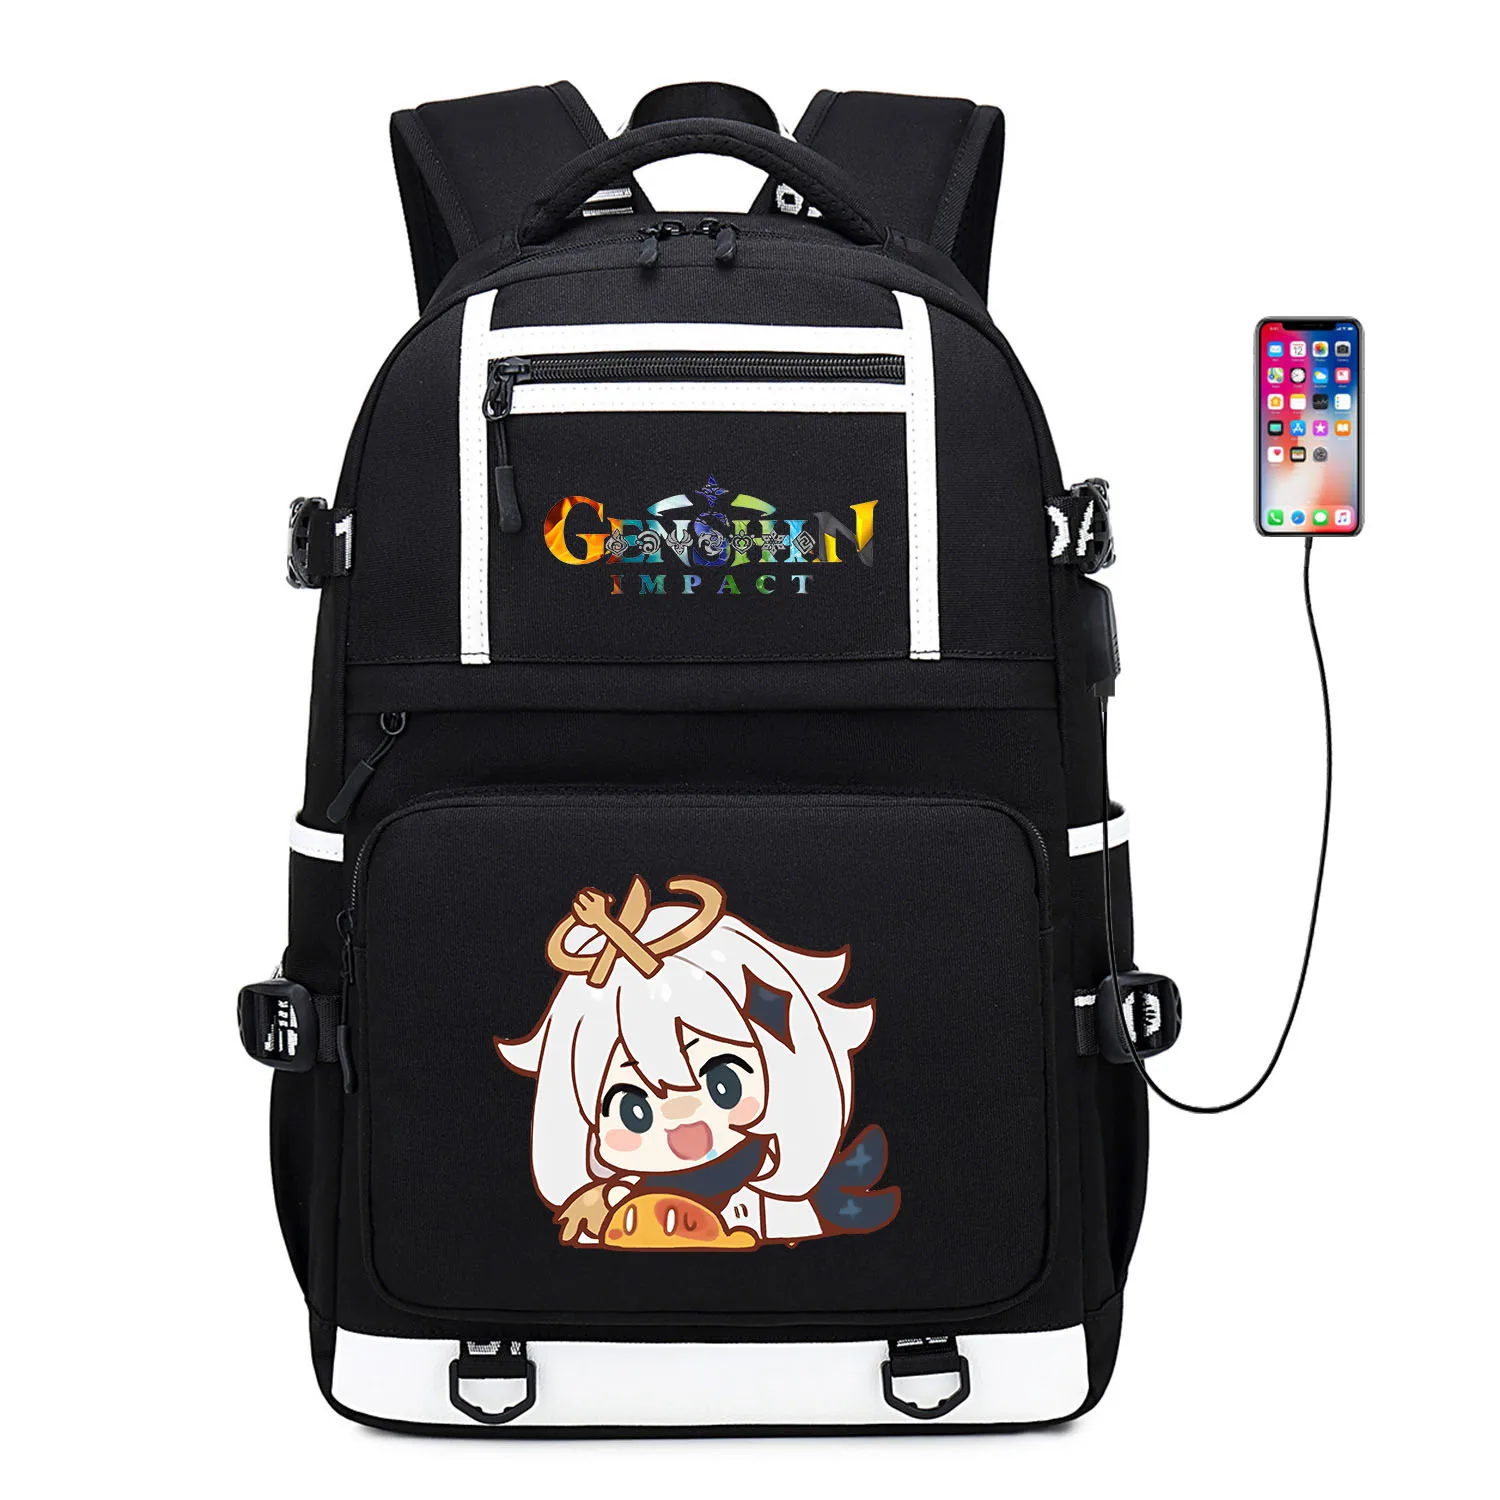 

Genshin Impact Teen Student School Bag Outdoor Travel Bag Black Casual Bag Kids Backpack Cartoon Print School Bag Boys Girls Bag